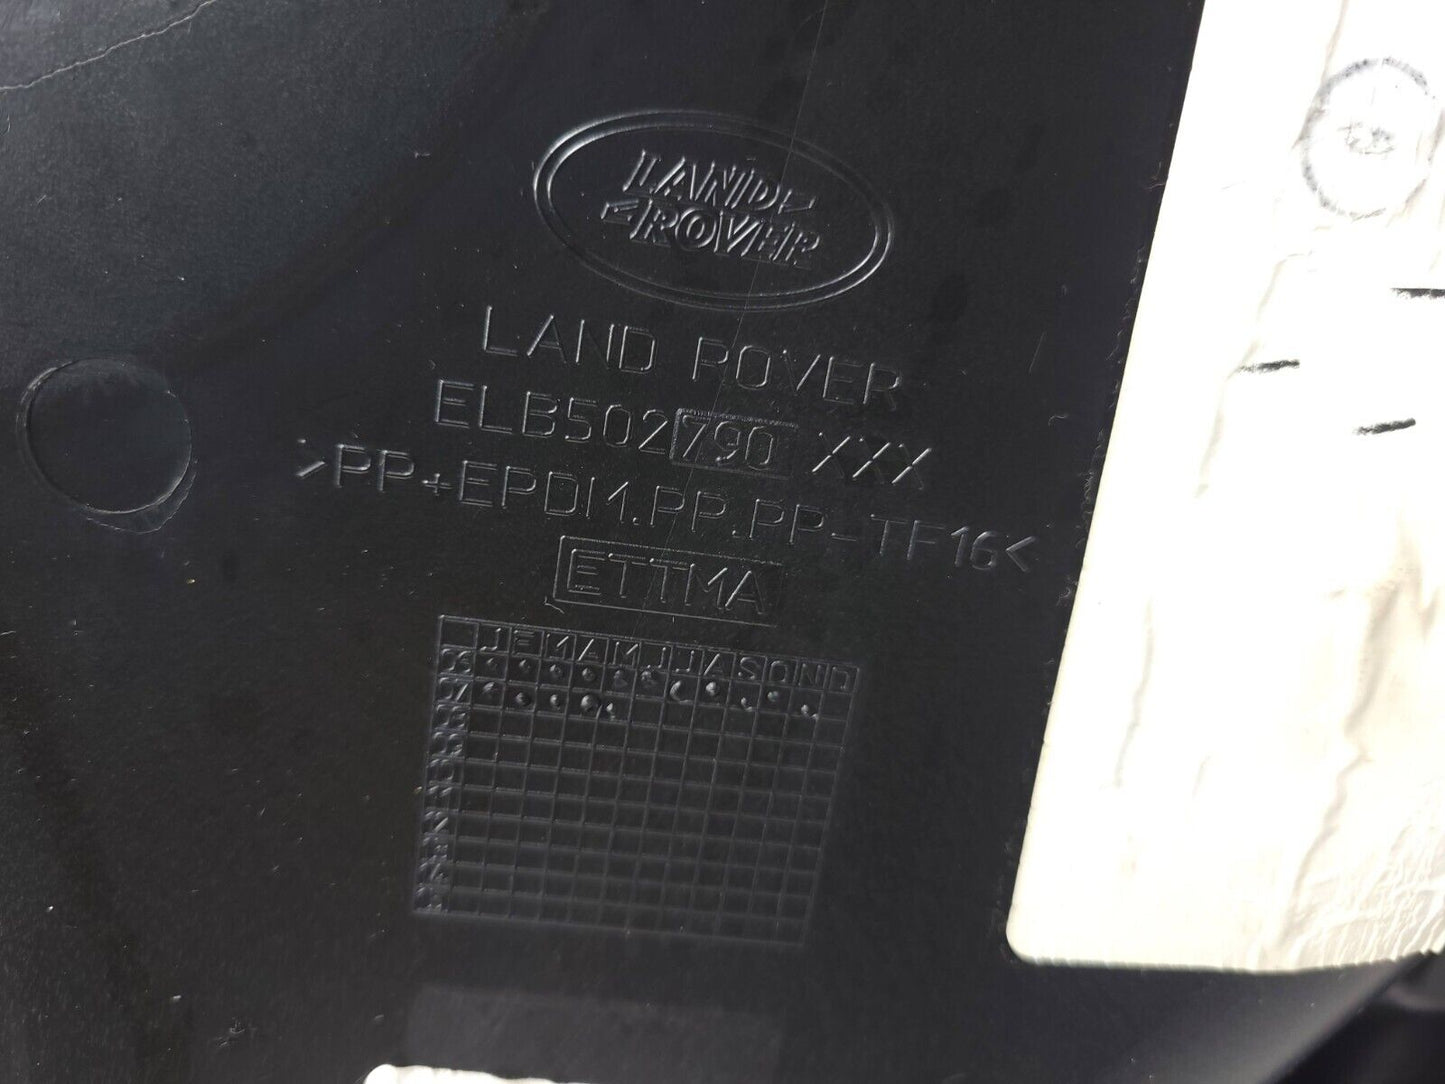 2006-2009 Range Rover Rear Door Panel Trim Driver Side Left OEM